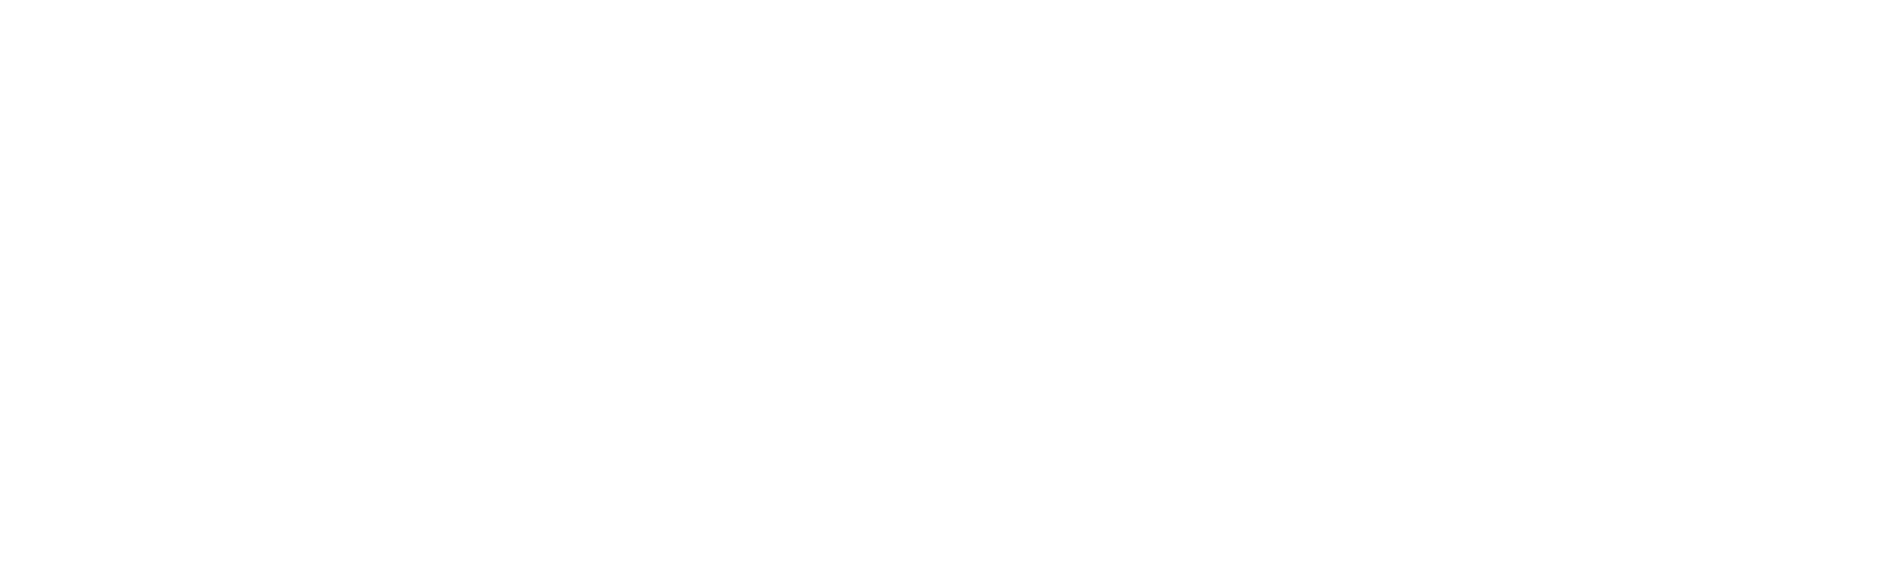 Customer.io logo-1